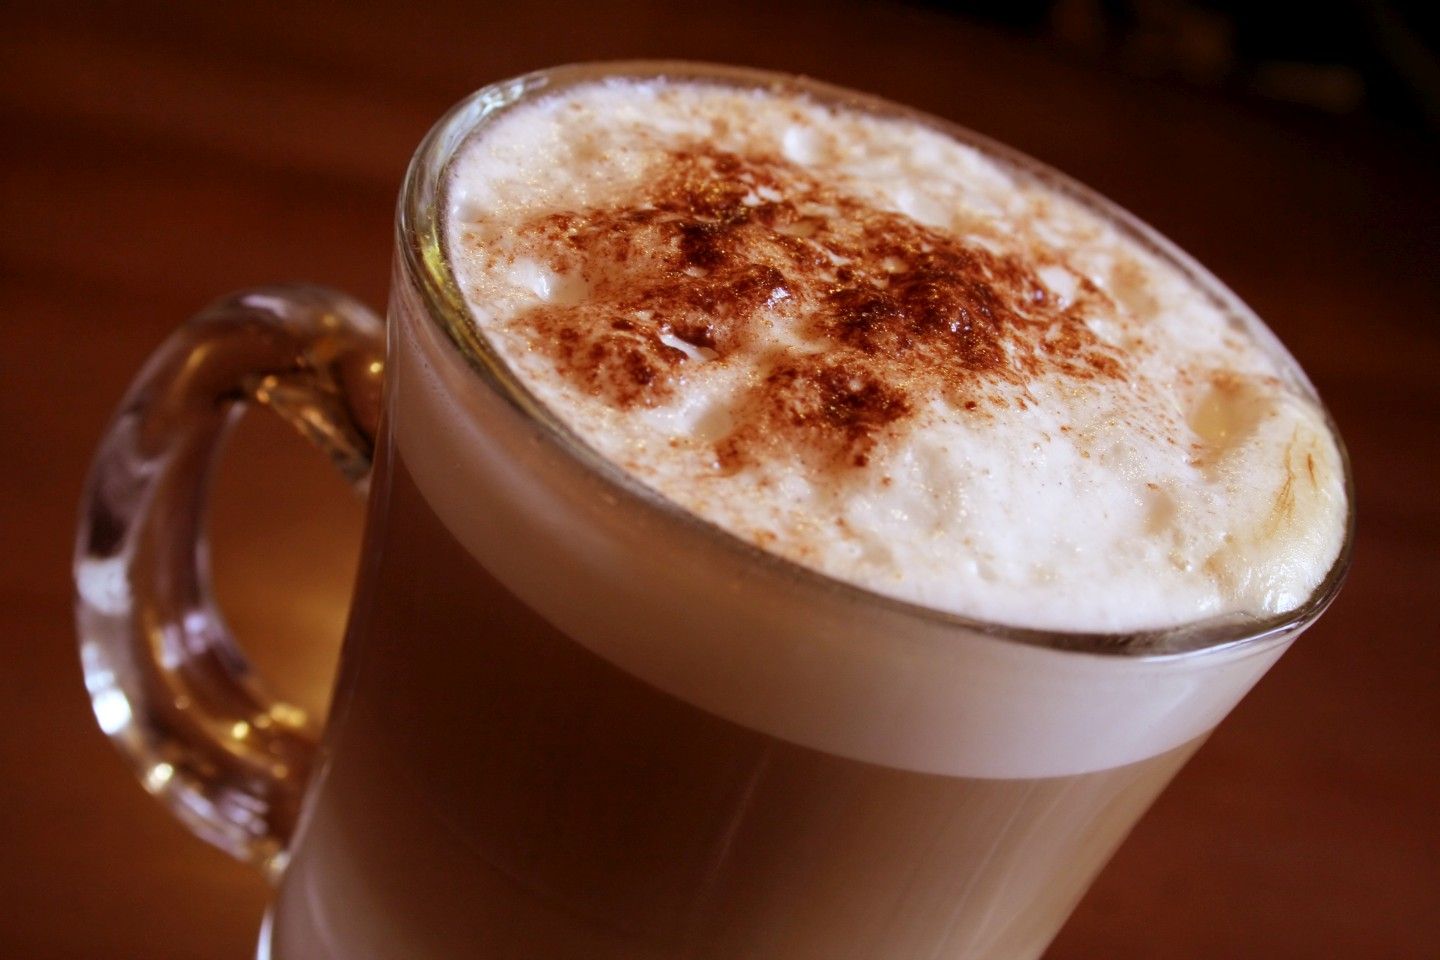 тирамису изготавливают на основе кофе